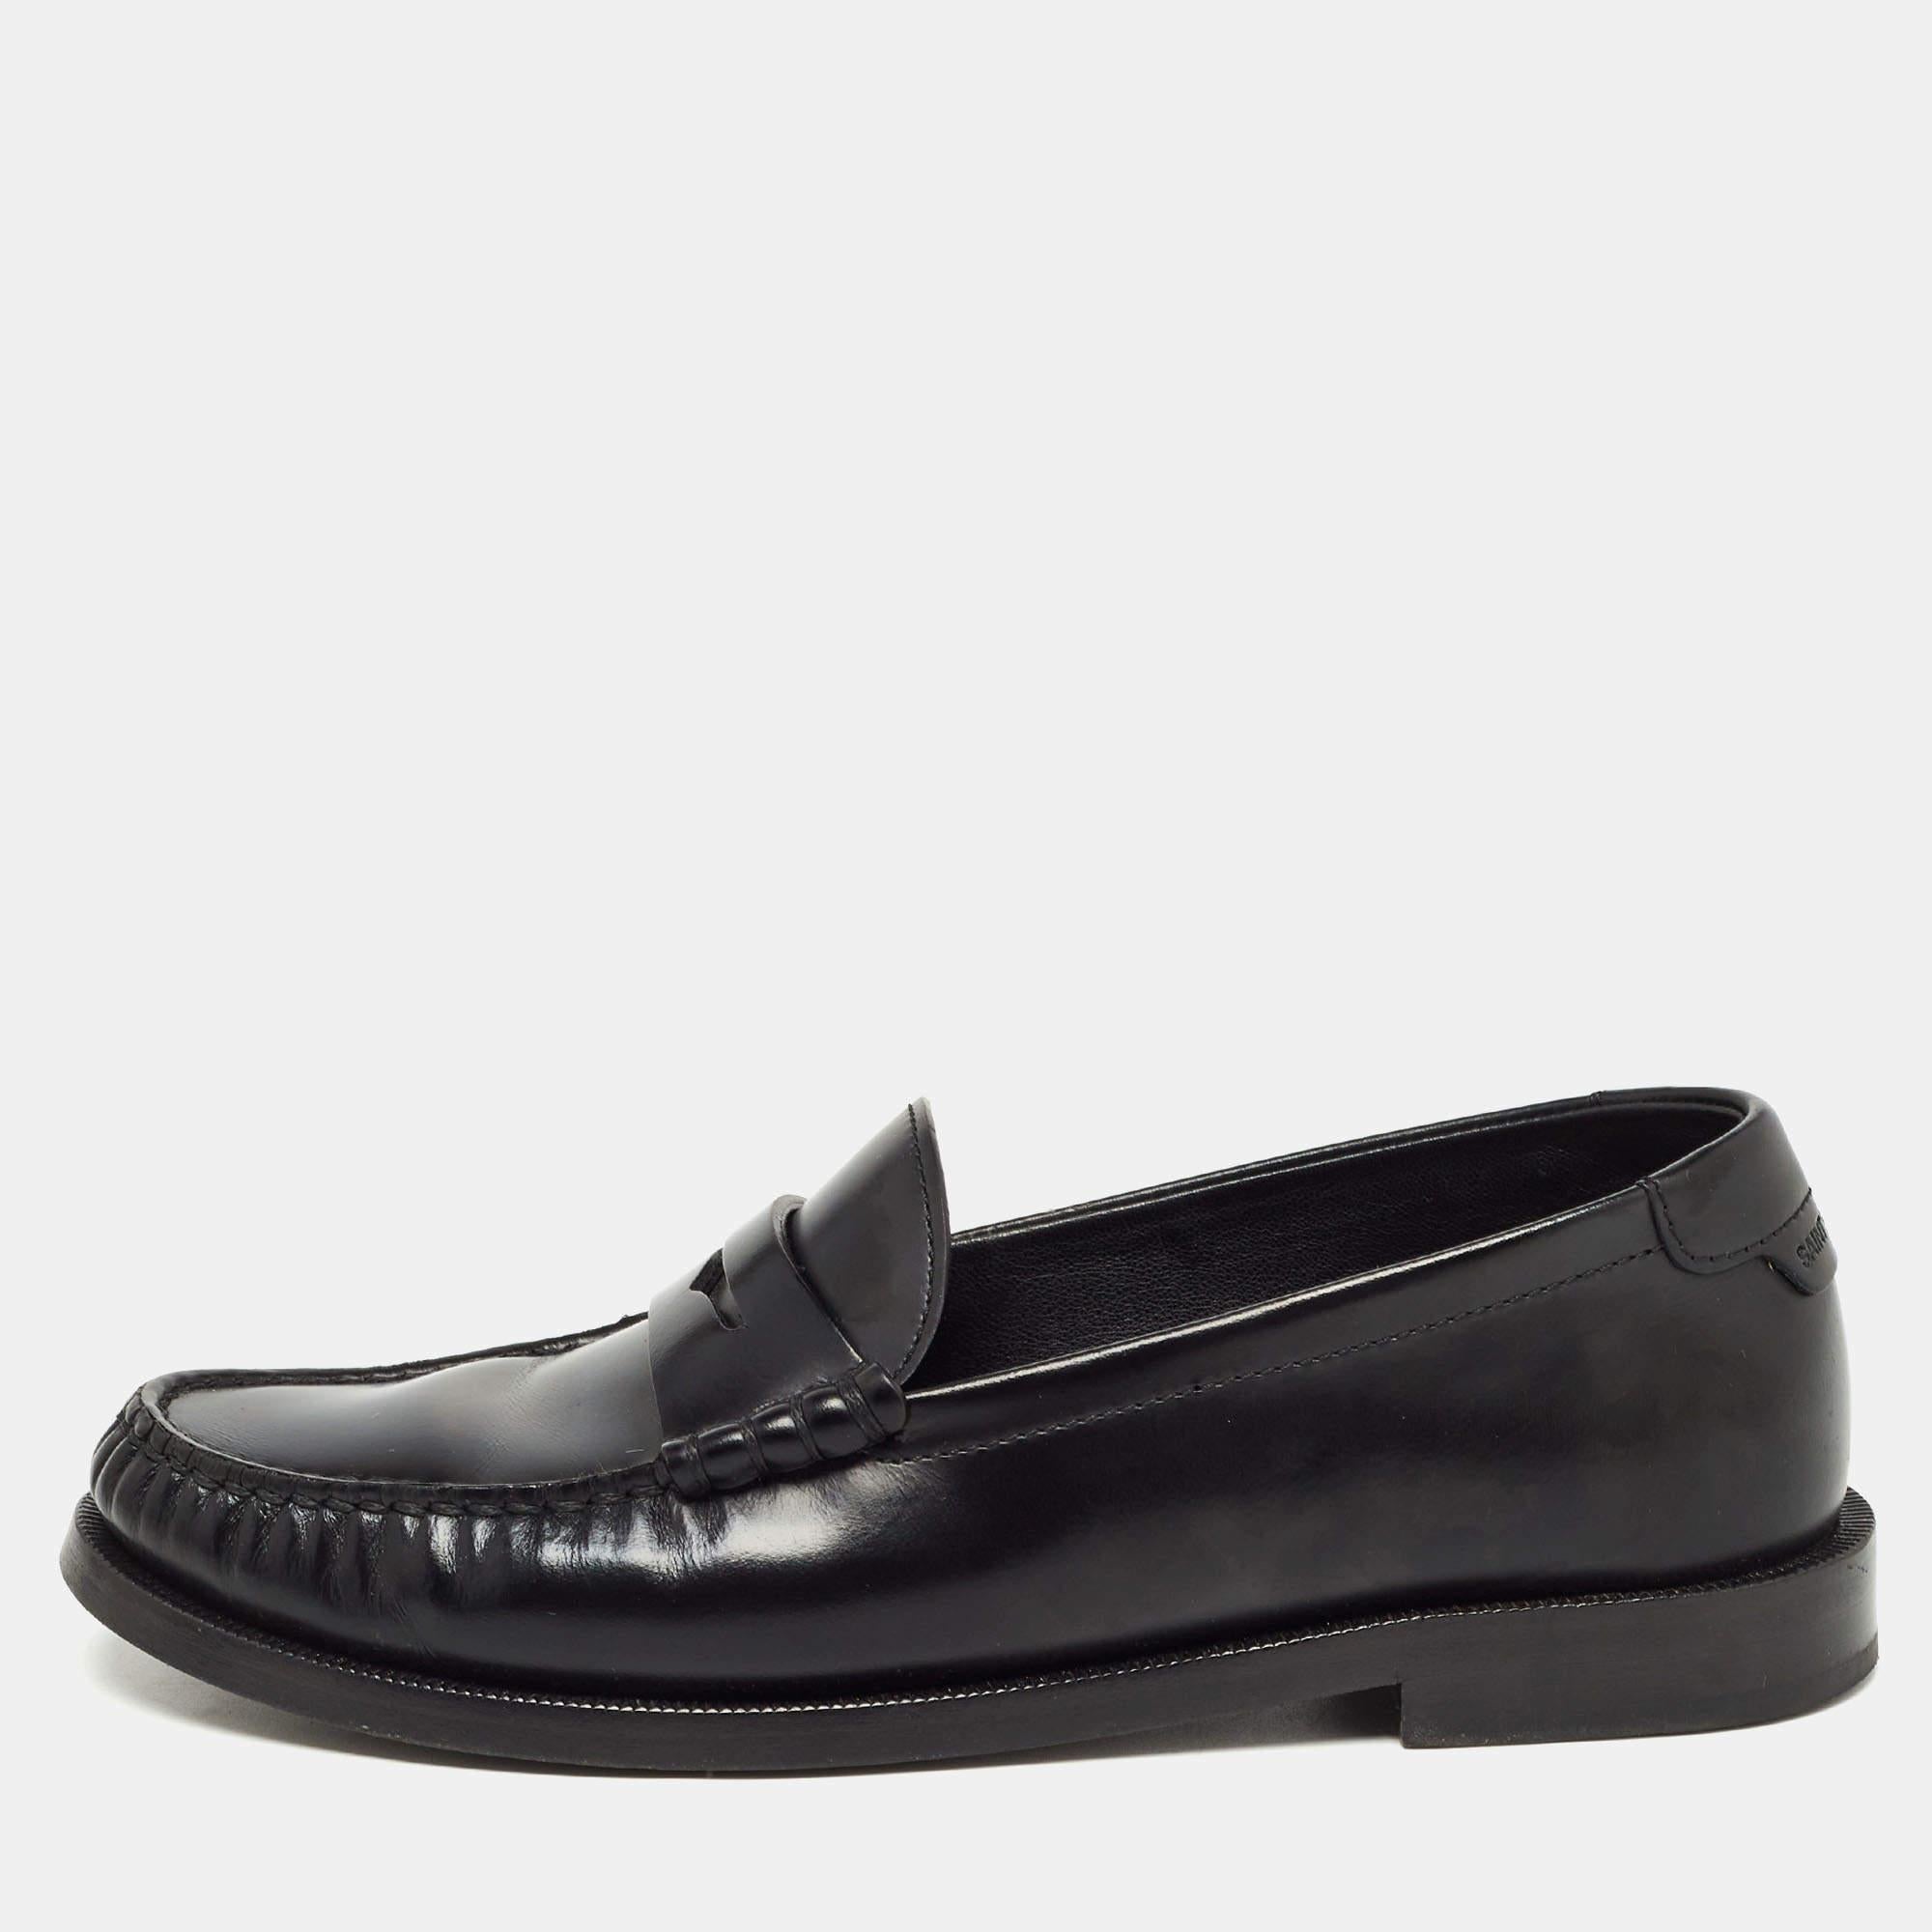 Saint Laurent Black Leather Slip On Loafers Size 35.5 For Sale 4